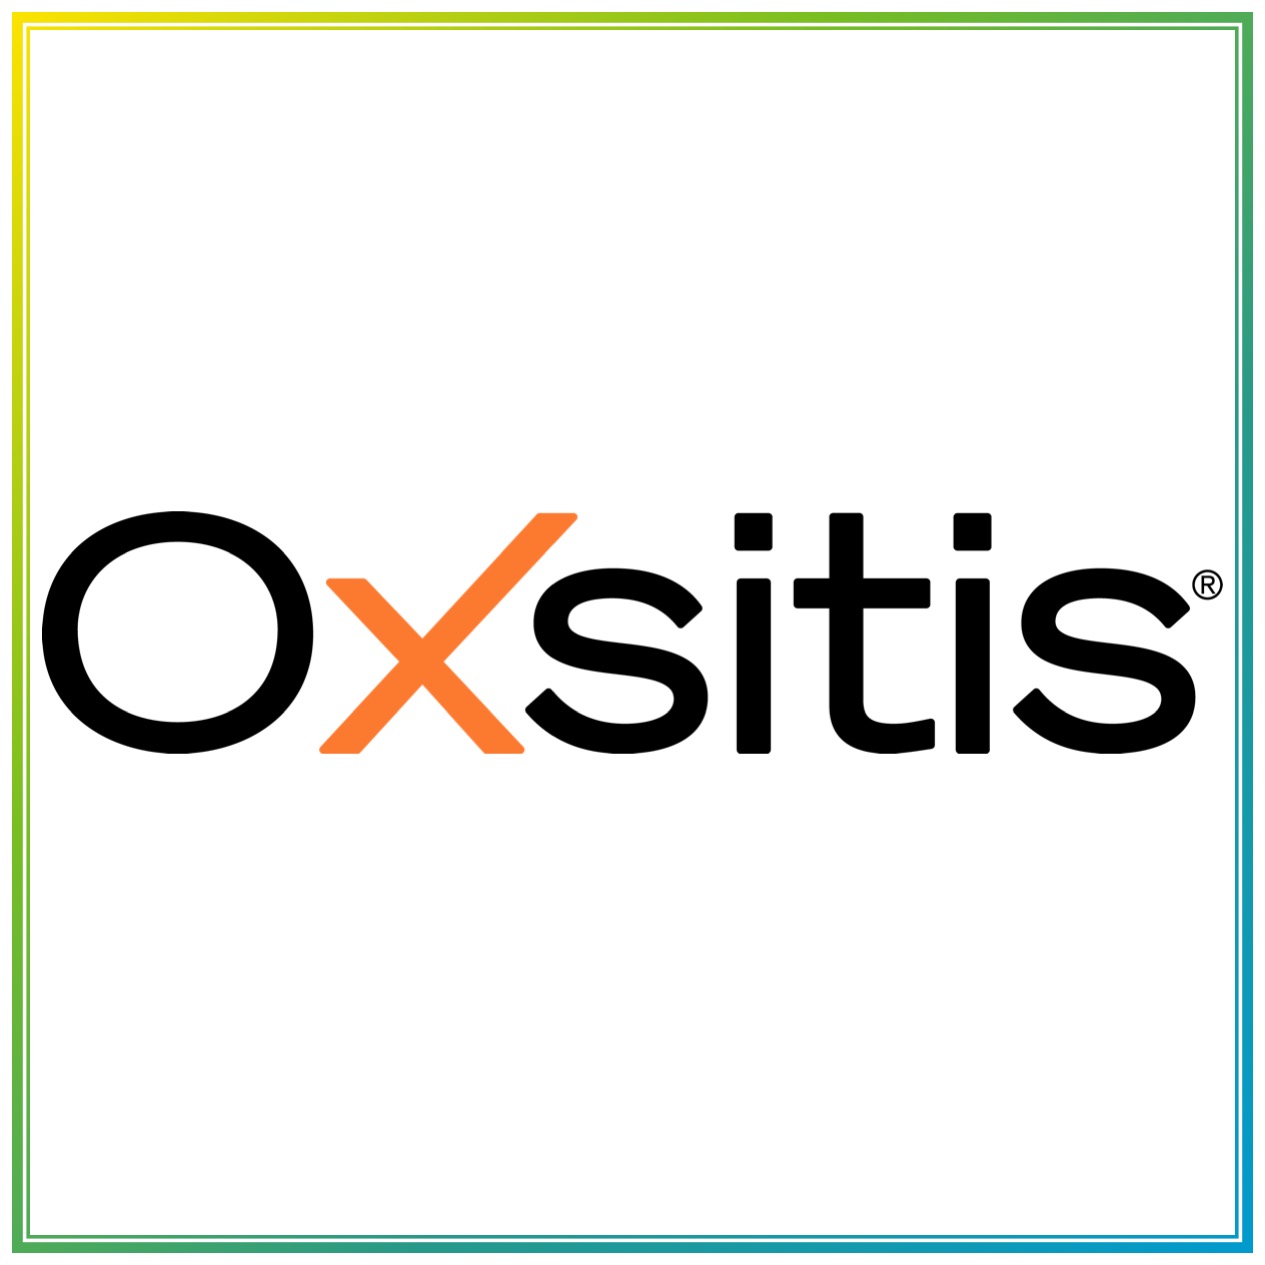 Oxsitis